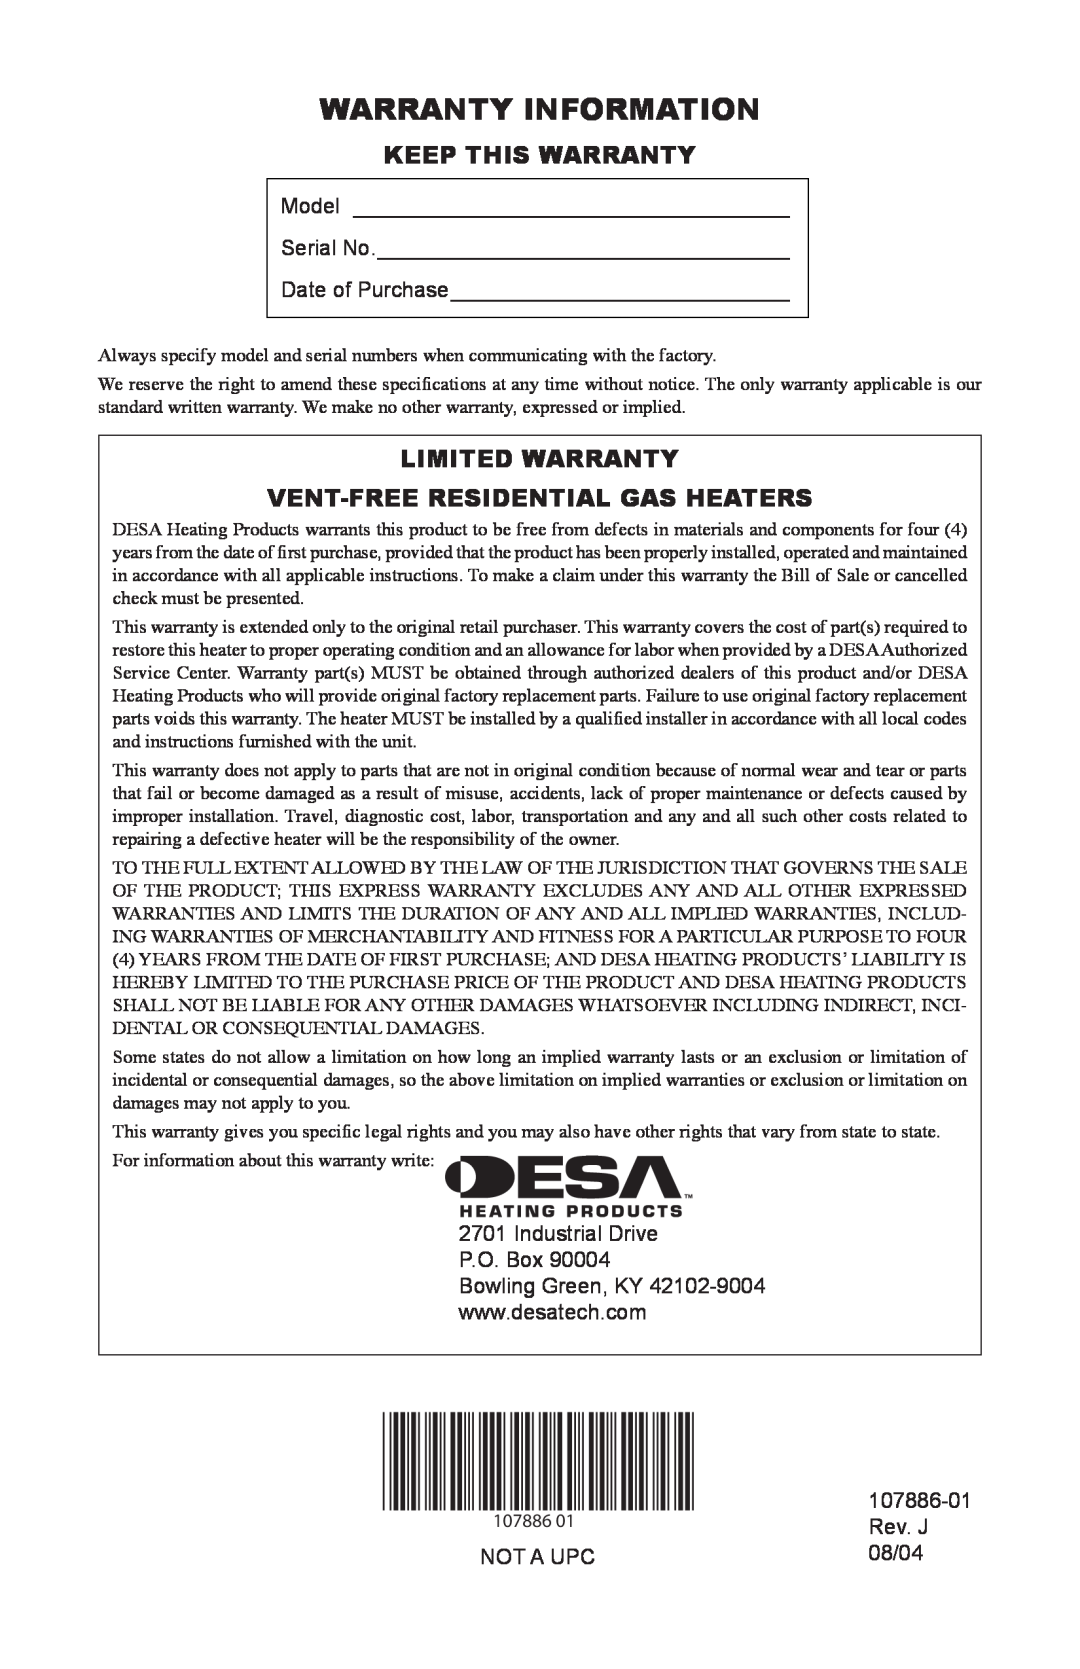 Desa VP30BT, VP20BT Warranty Information, Keep This Warranty, Limited Warranty Vent-Freeresidential Gas Heaters, 107886-01 